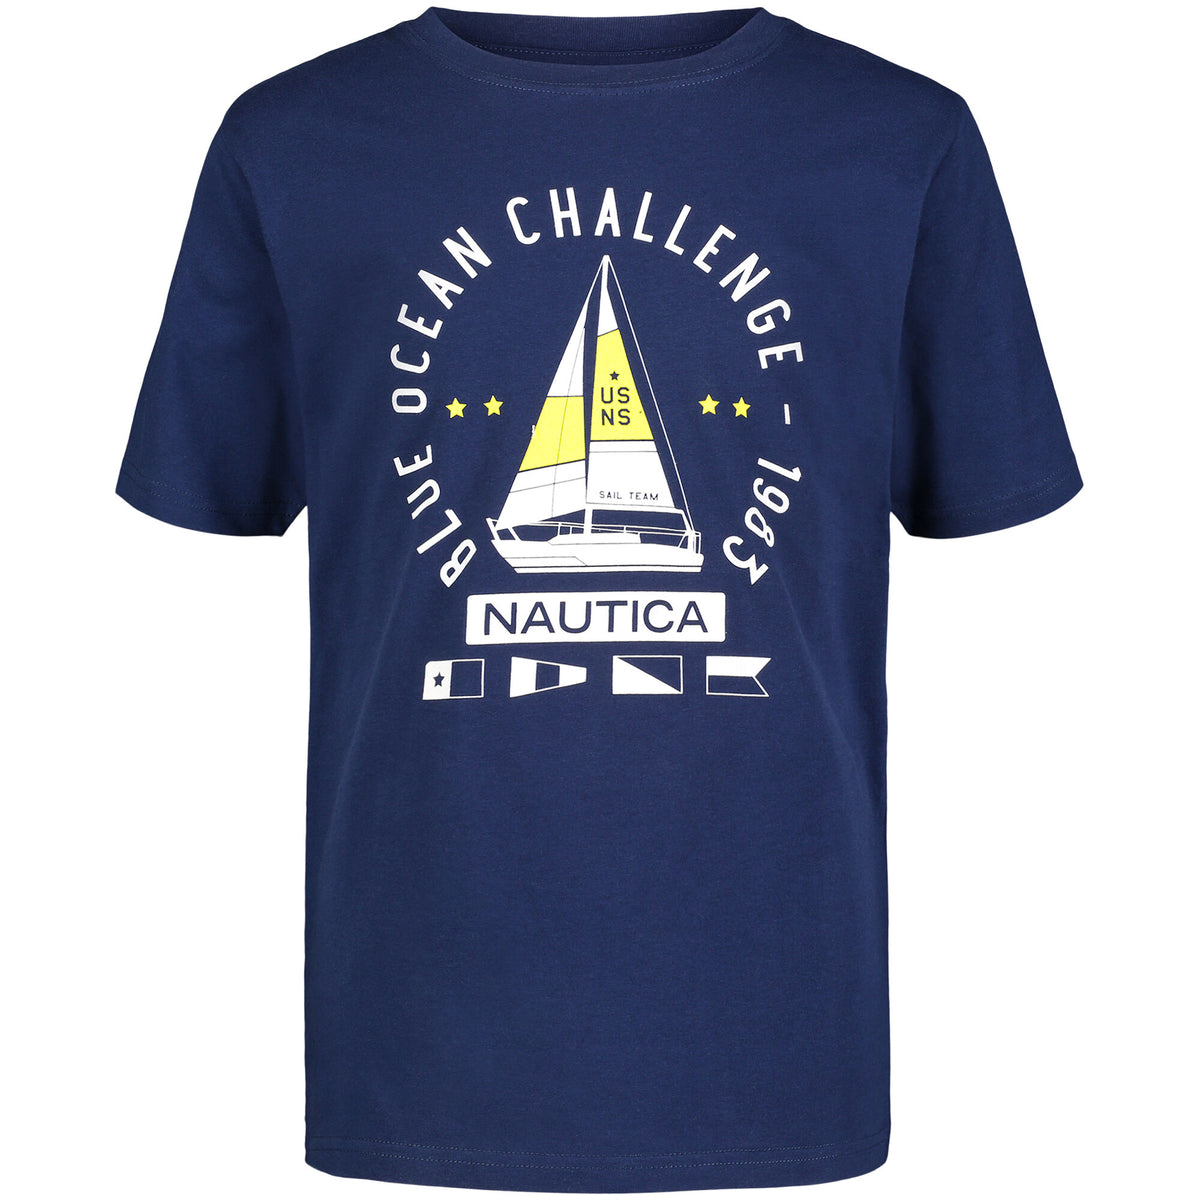 Nautica Toddler Boys' Ocean Challenge Graphic T-Shirt (2T-4T) J Navy